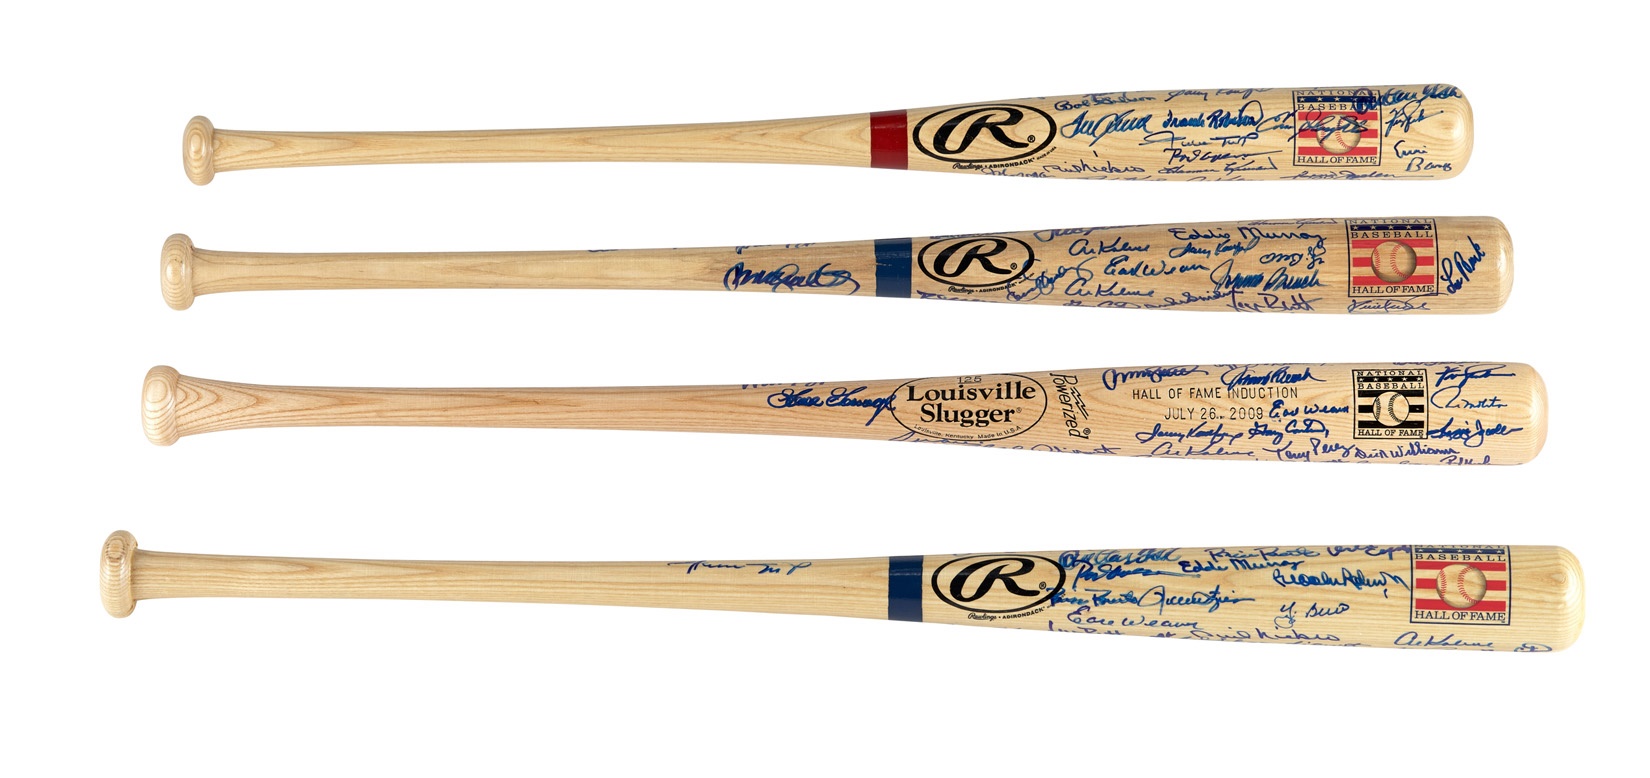 Red Schoendienst Baseballs & Autographs - Baseball Hall of Fame Induction Signed Bats (4)